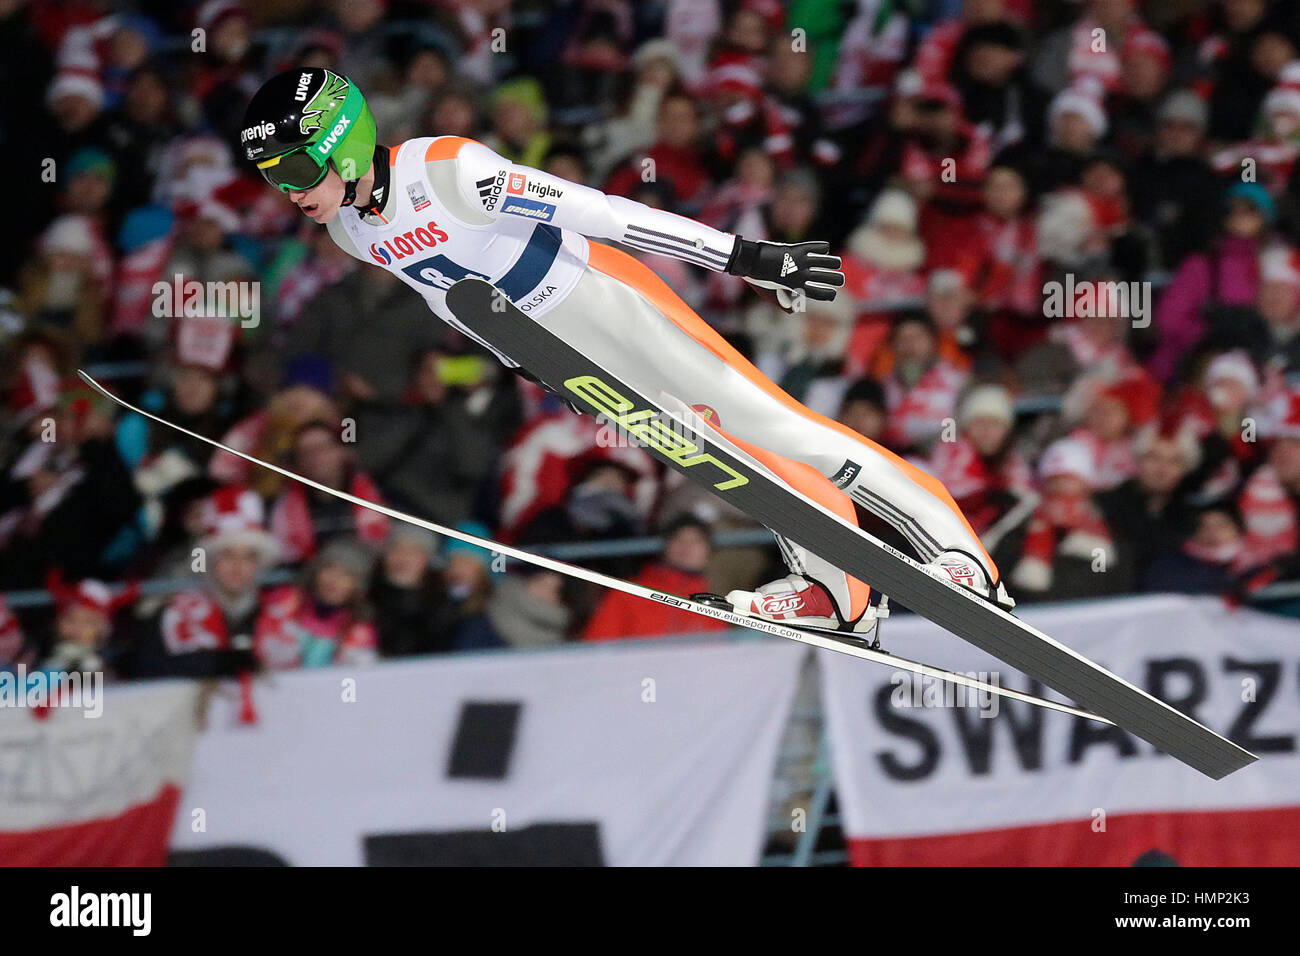 ZAKOPANE, POLAND - JANUARY 23, 2016: FIS Ski Jumping World Cup in Zakopane o/p Peter Prevc SLO Stock Photo